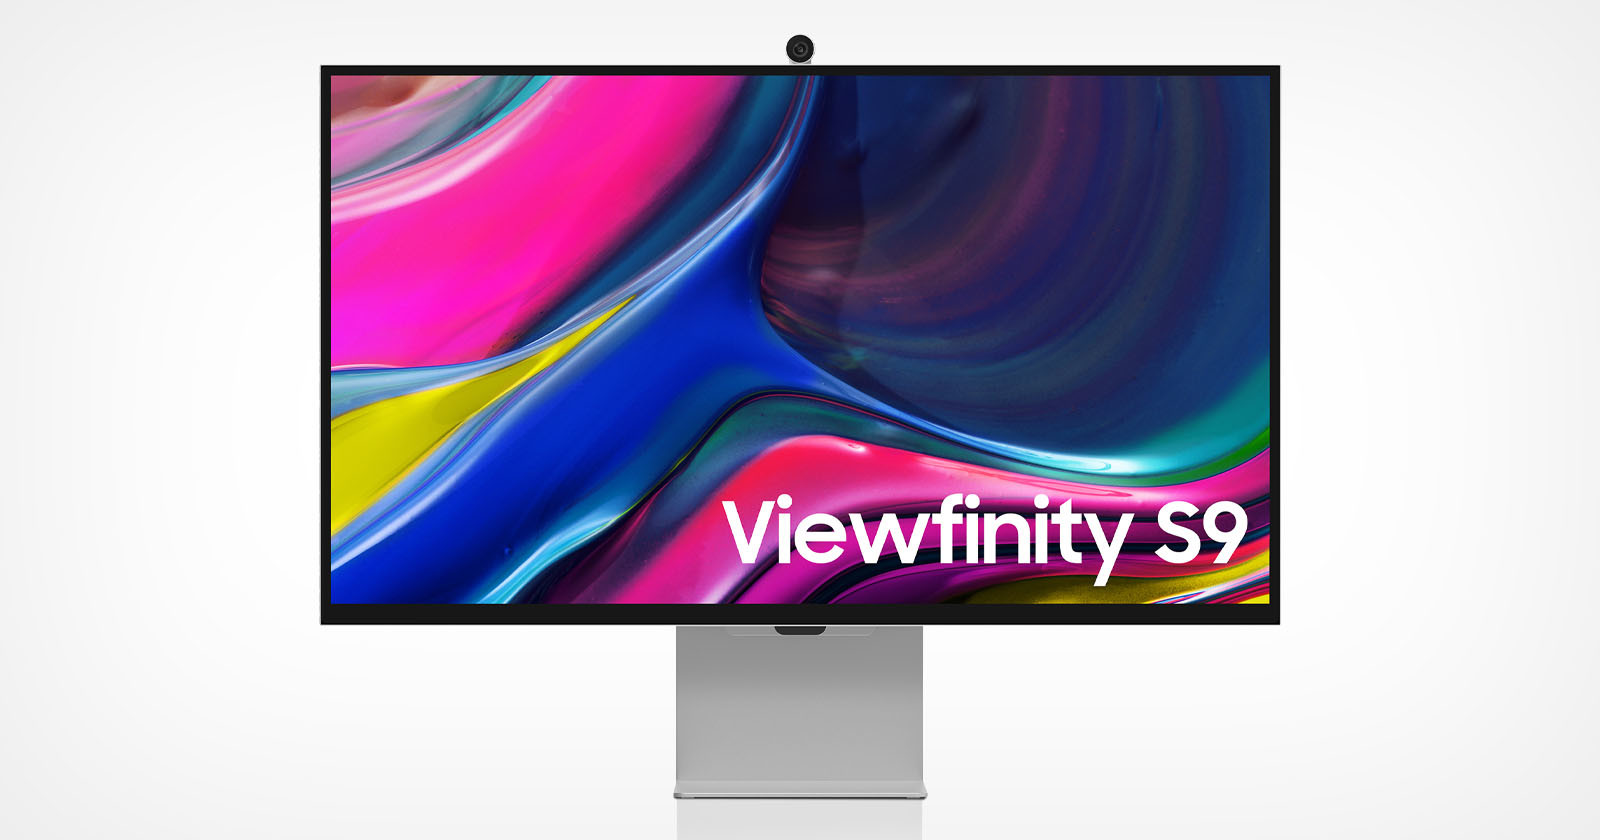  samsung viewfinity apple-like color-calibrated monitor 